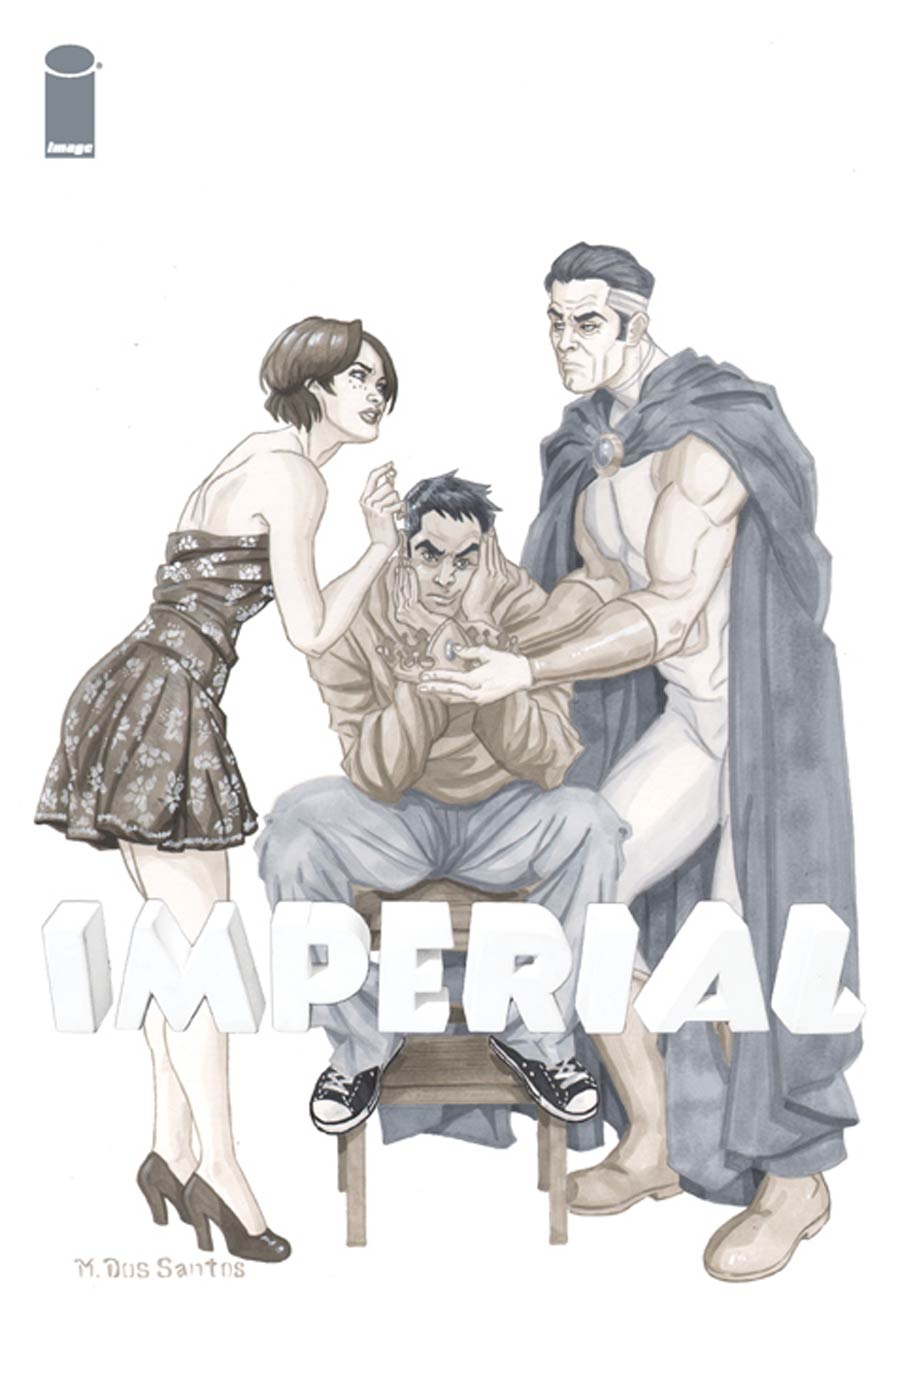 Imperial #3